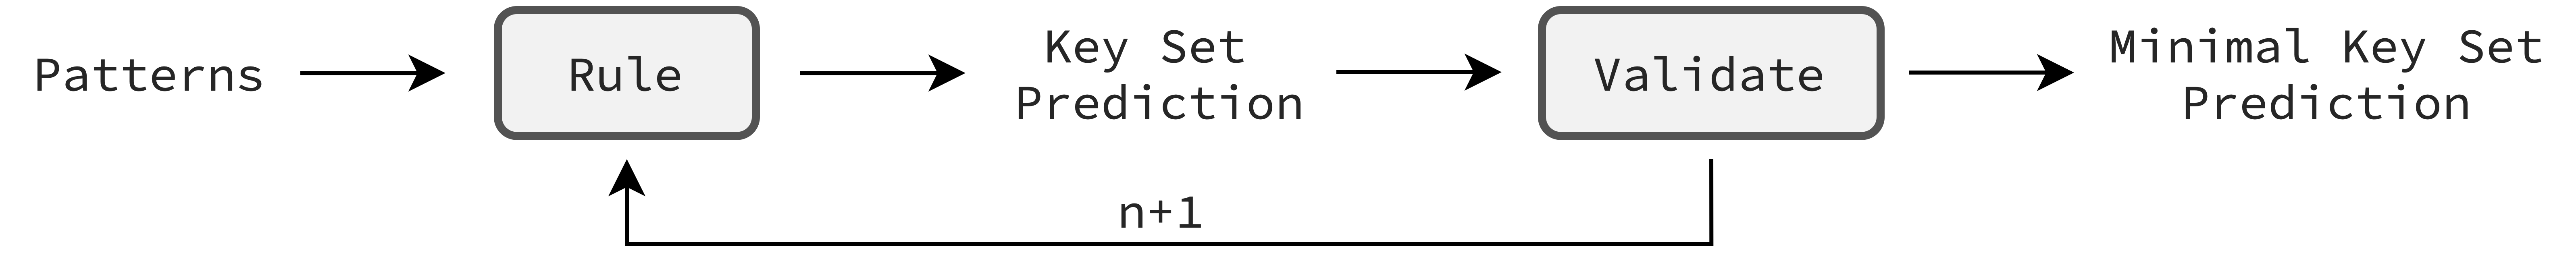 7.1-process-minimal-key-set